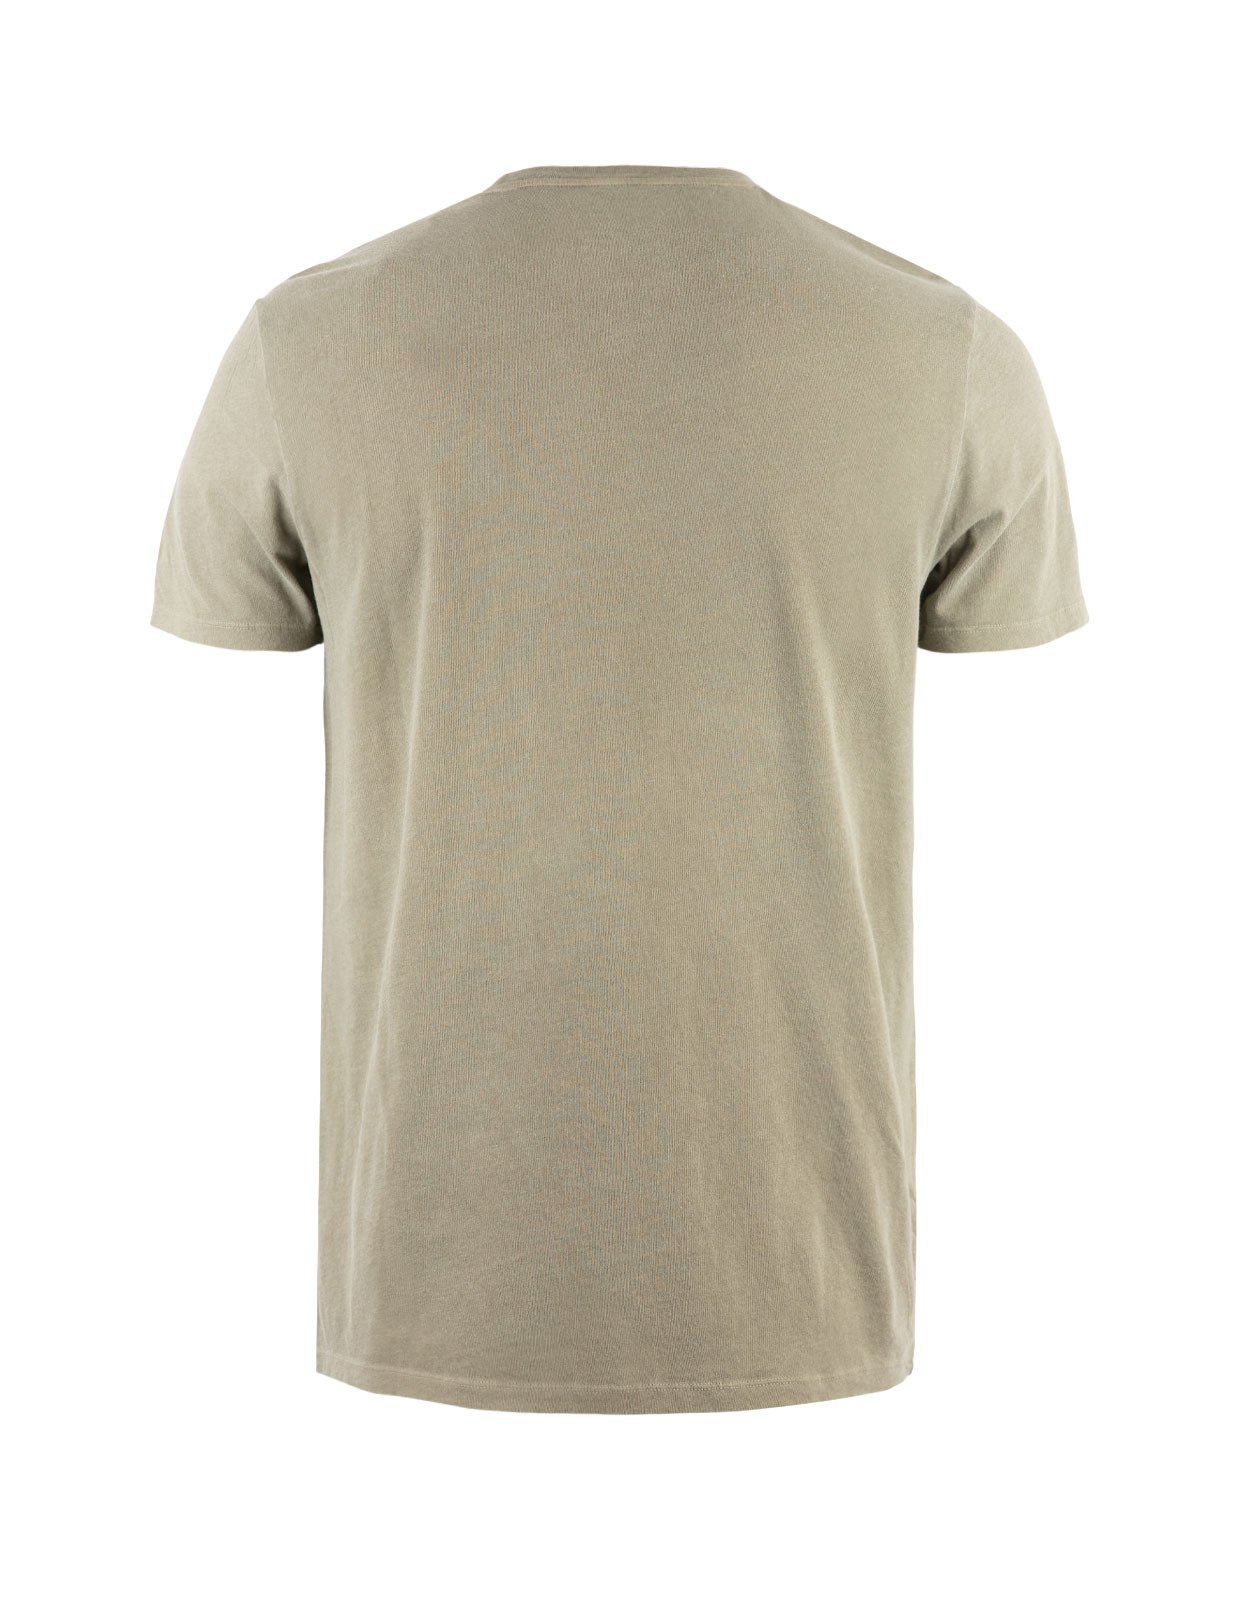 Silk Touch T-Shirt Khaki